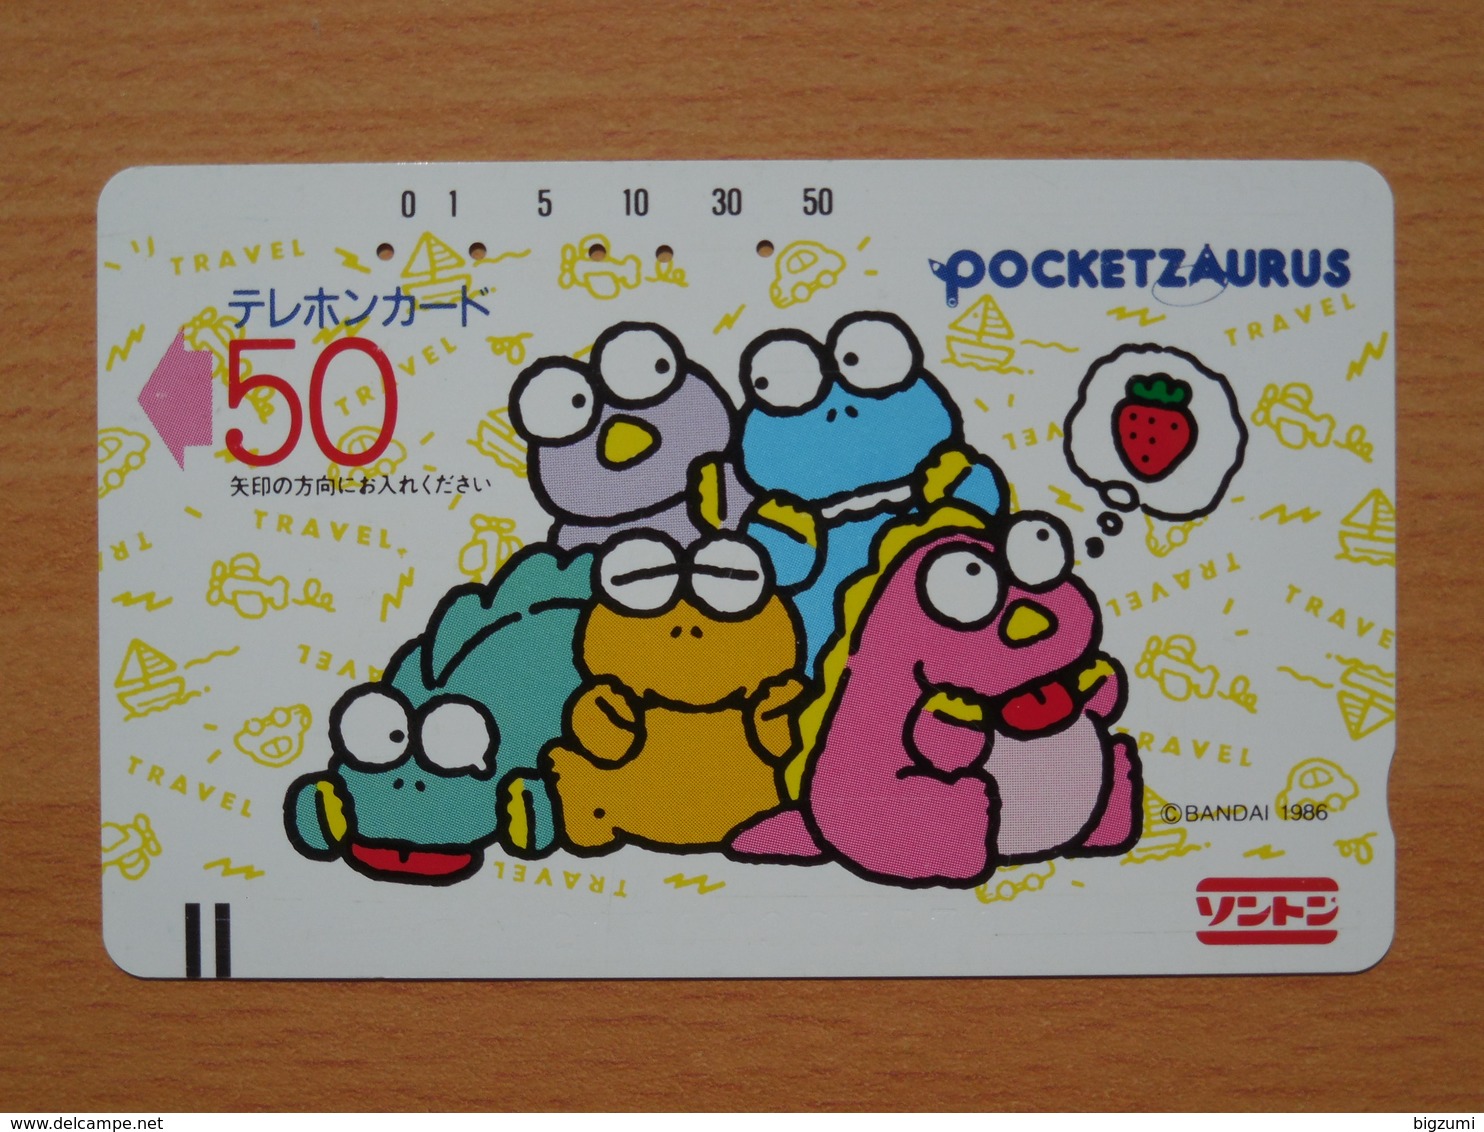 Japon Japan Free Front Bar, Balken Phonecard / 110-9576 / Pocketzaurus / Bandai - Spiele